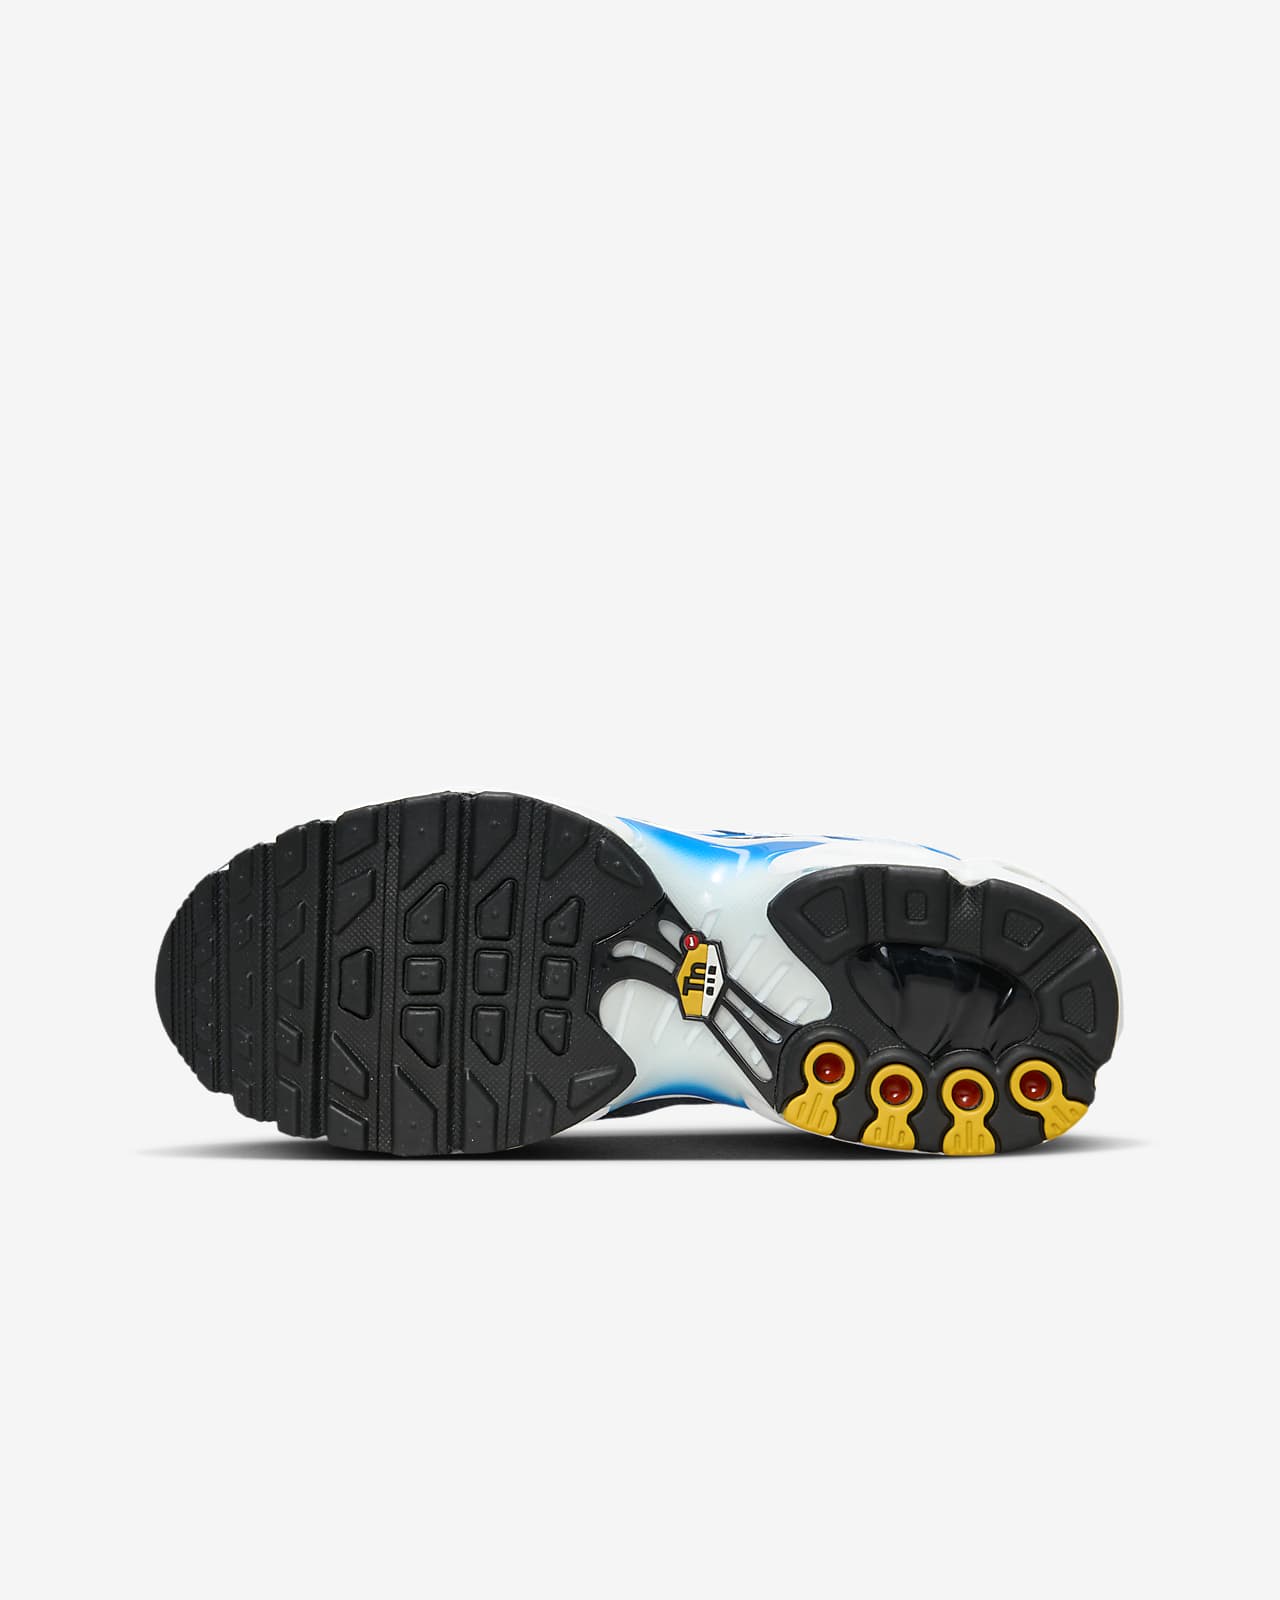 Nike Air Max Alpha Trainer 5 | Mens Training Shoes | Rogan's Shoes